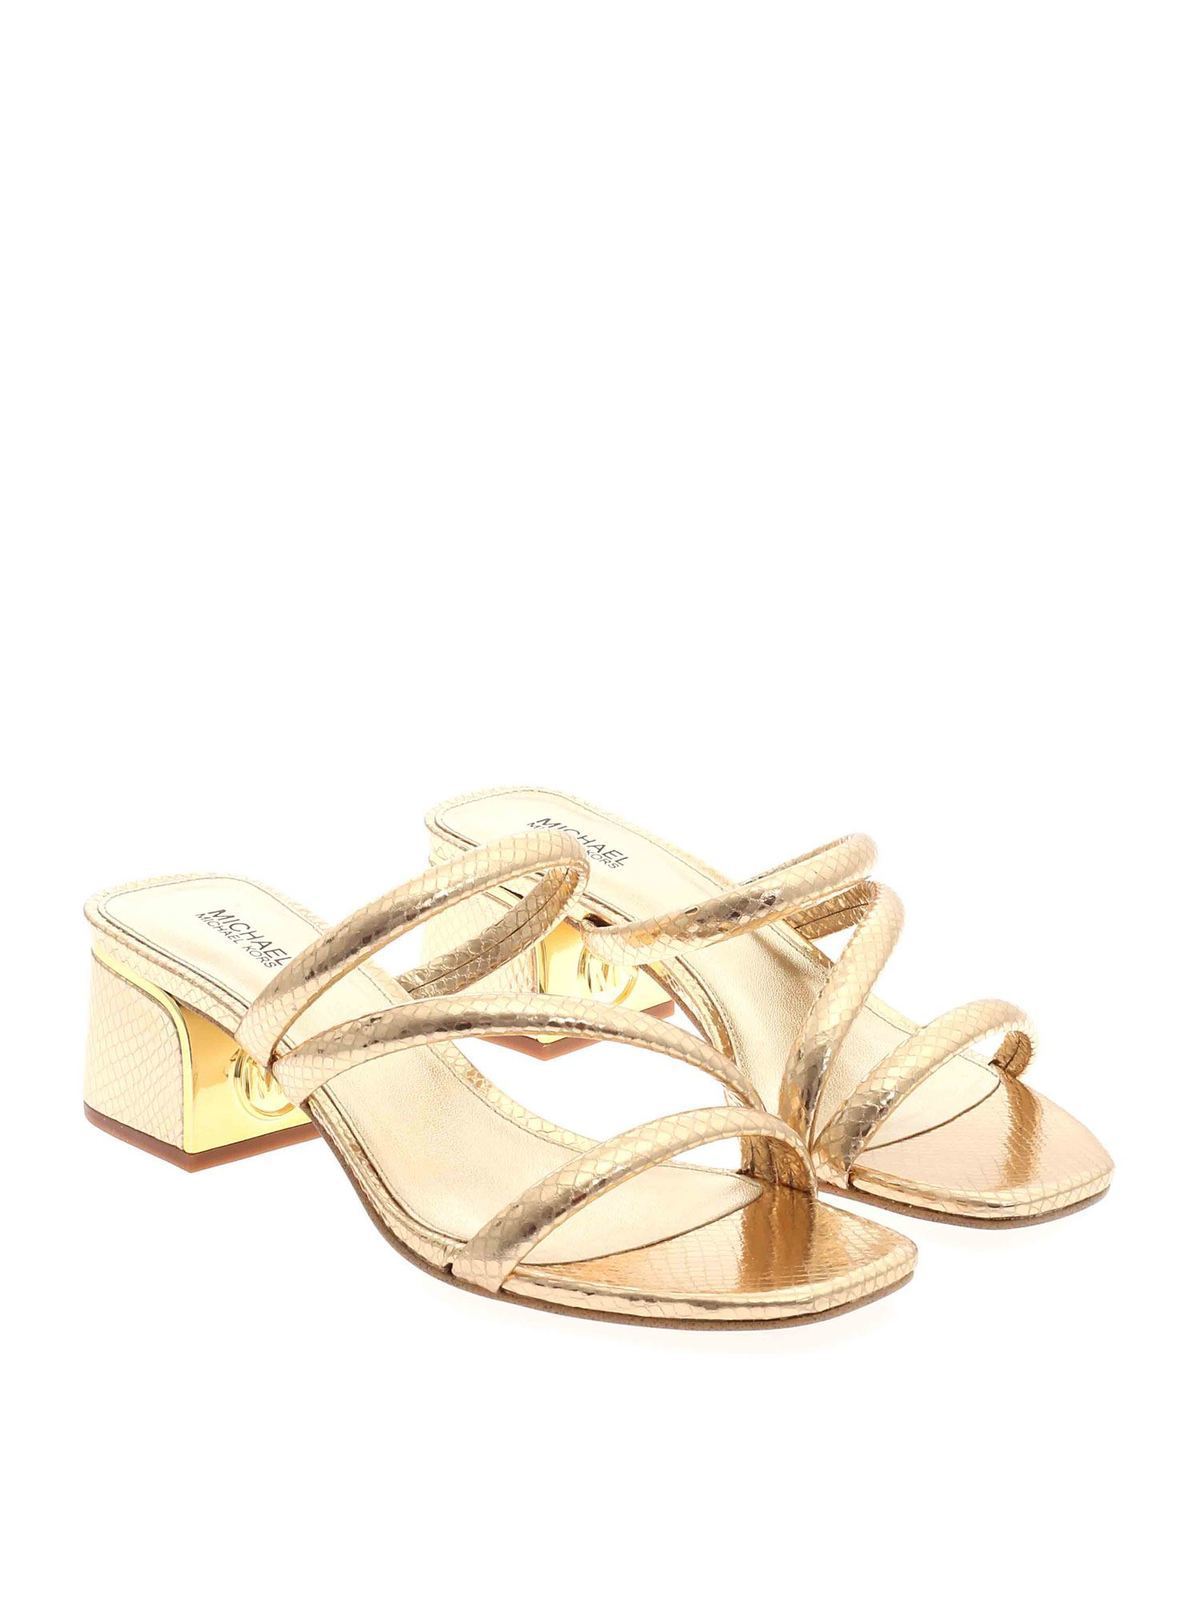 Sandals Michael Kors - Gold Sandals - 40S1LAMP2M740 | Shop online at iKRIX